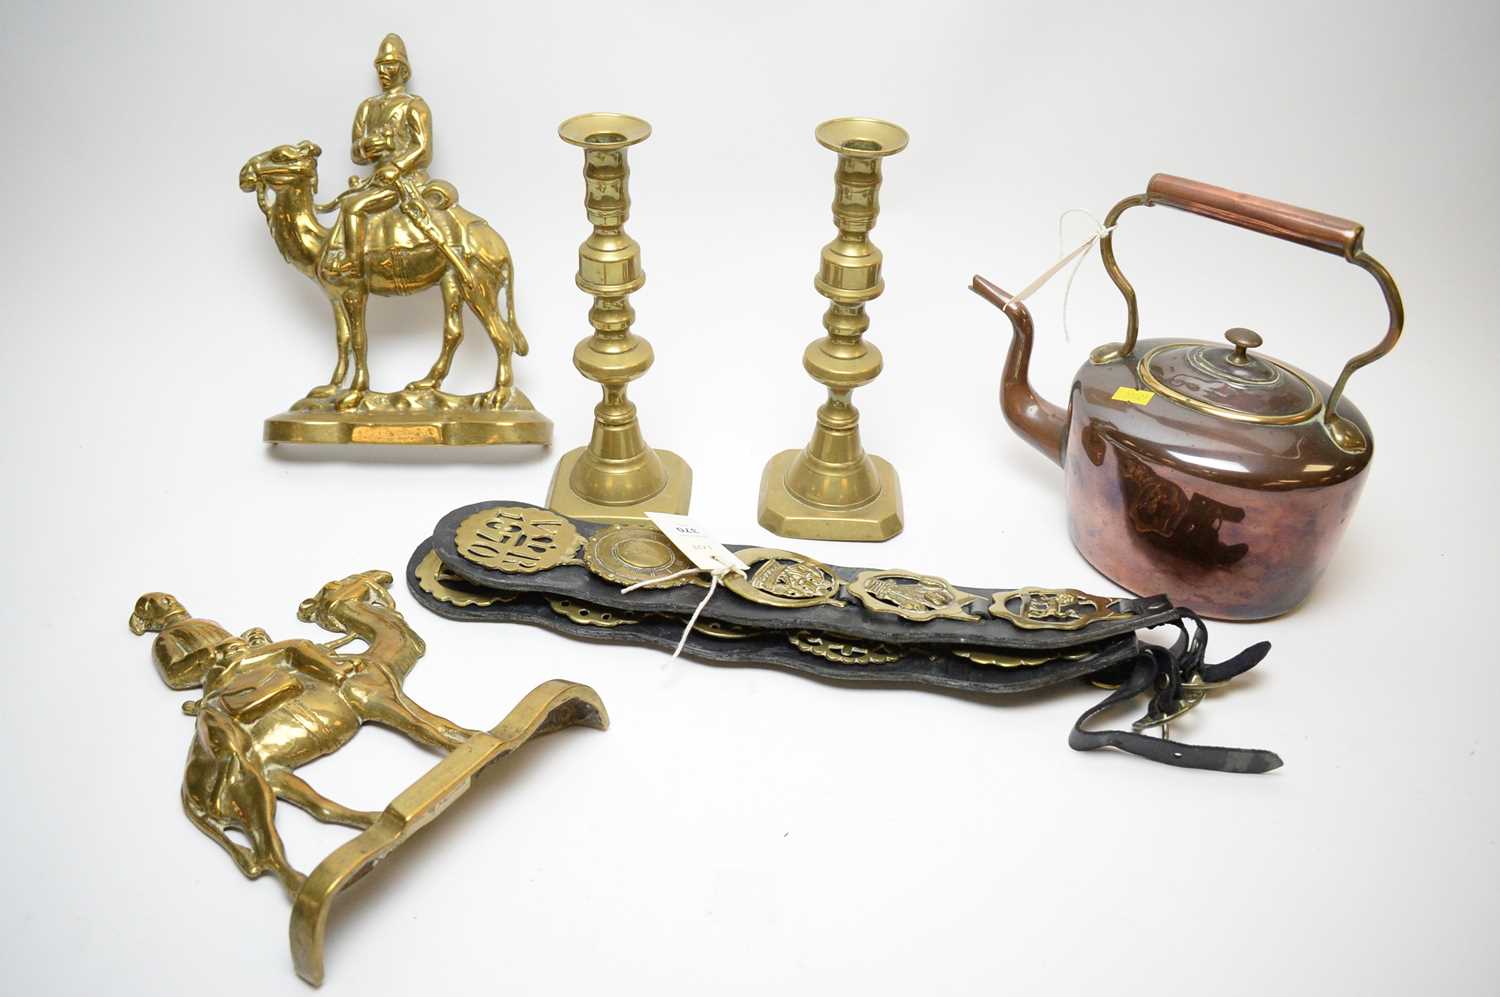 Miscellaneous cast brass items.